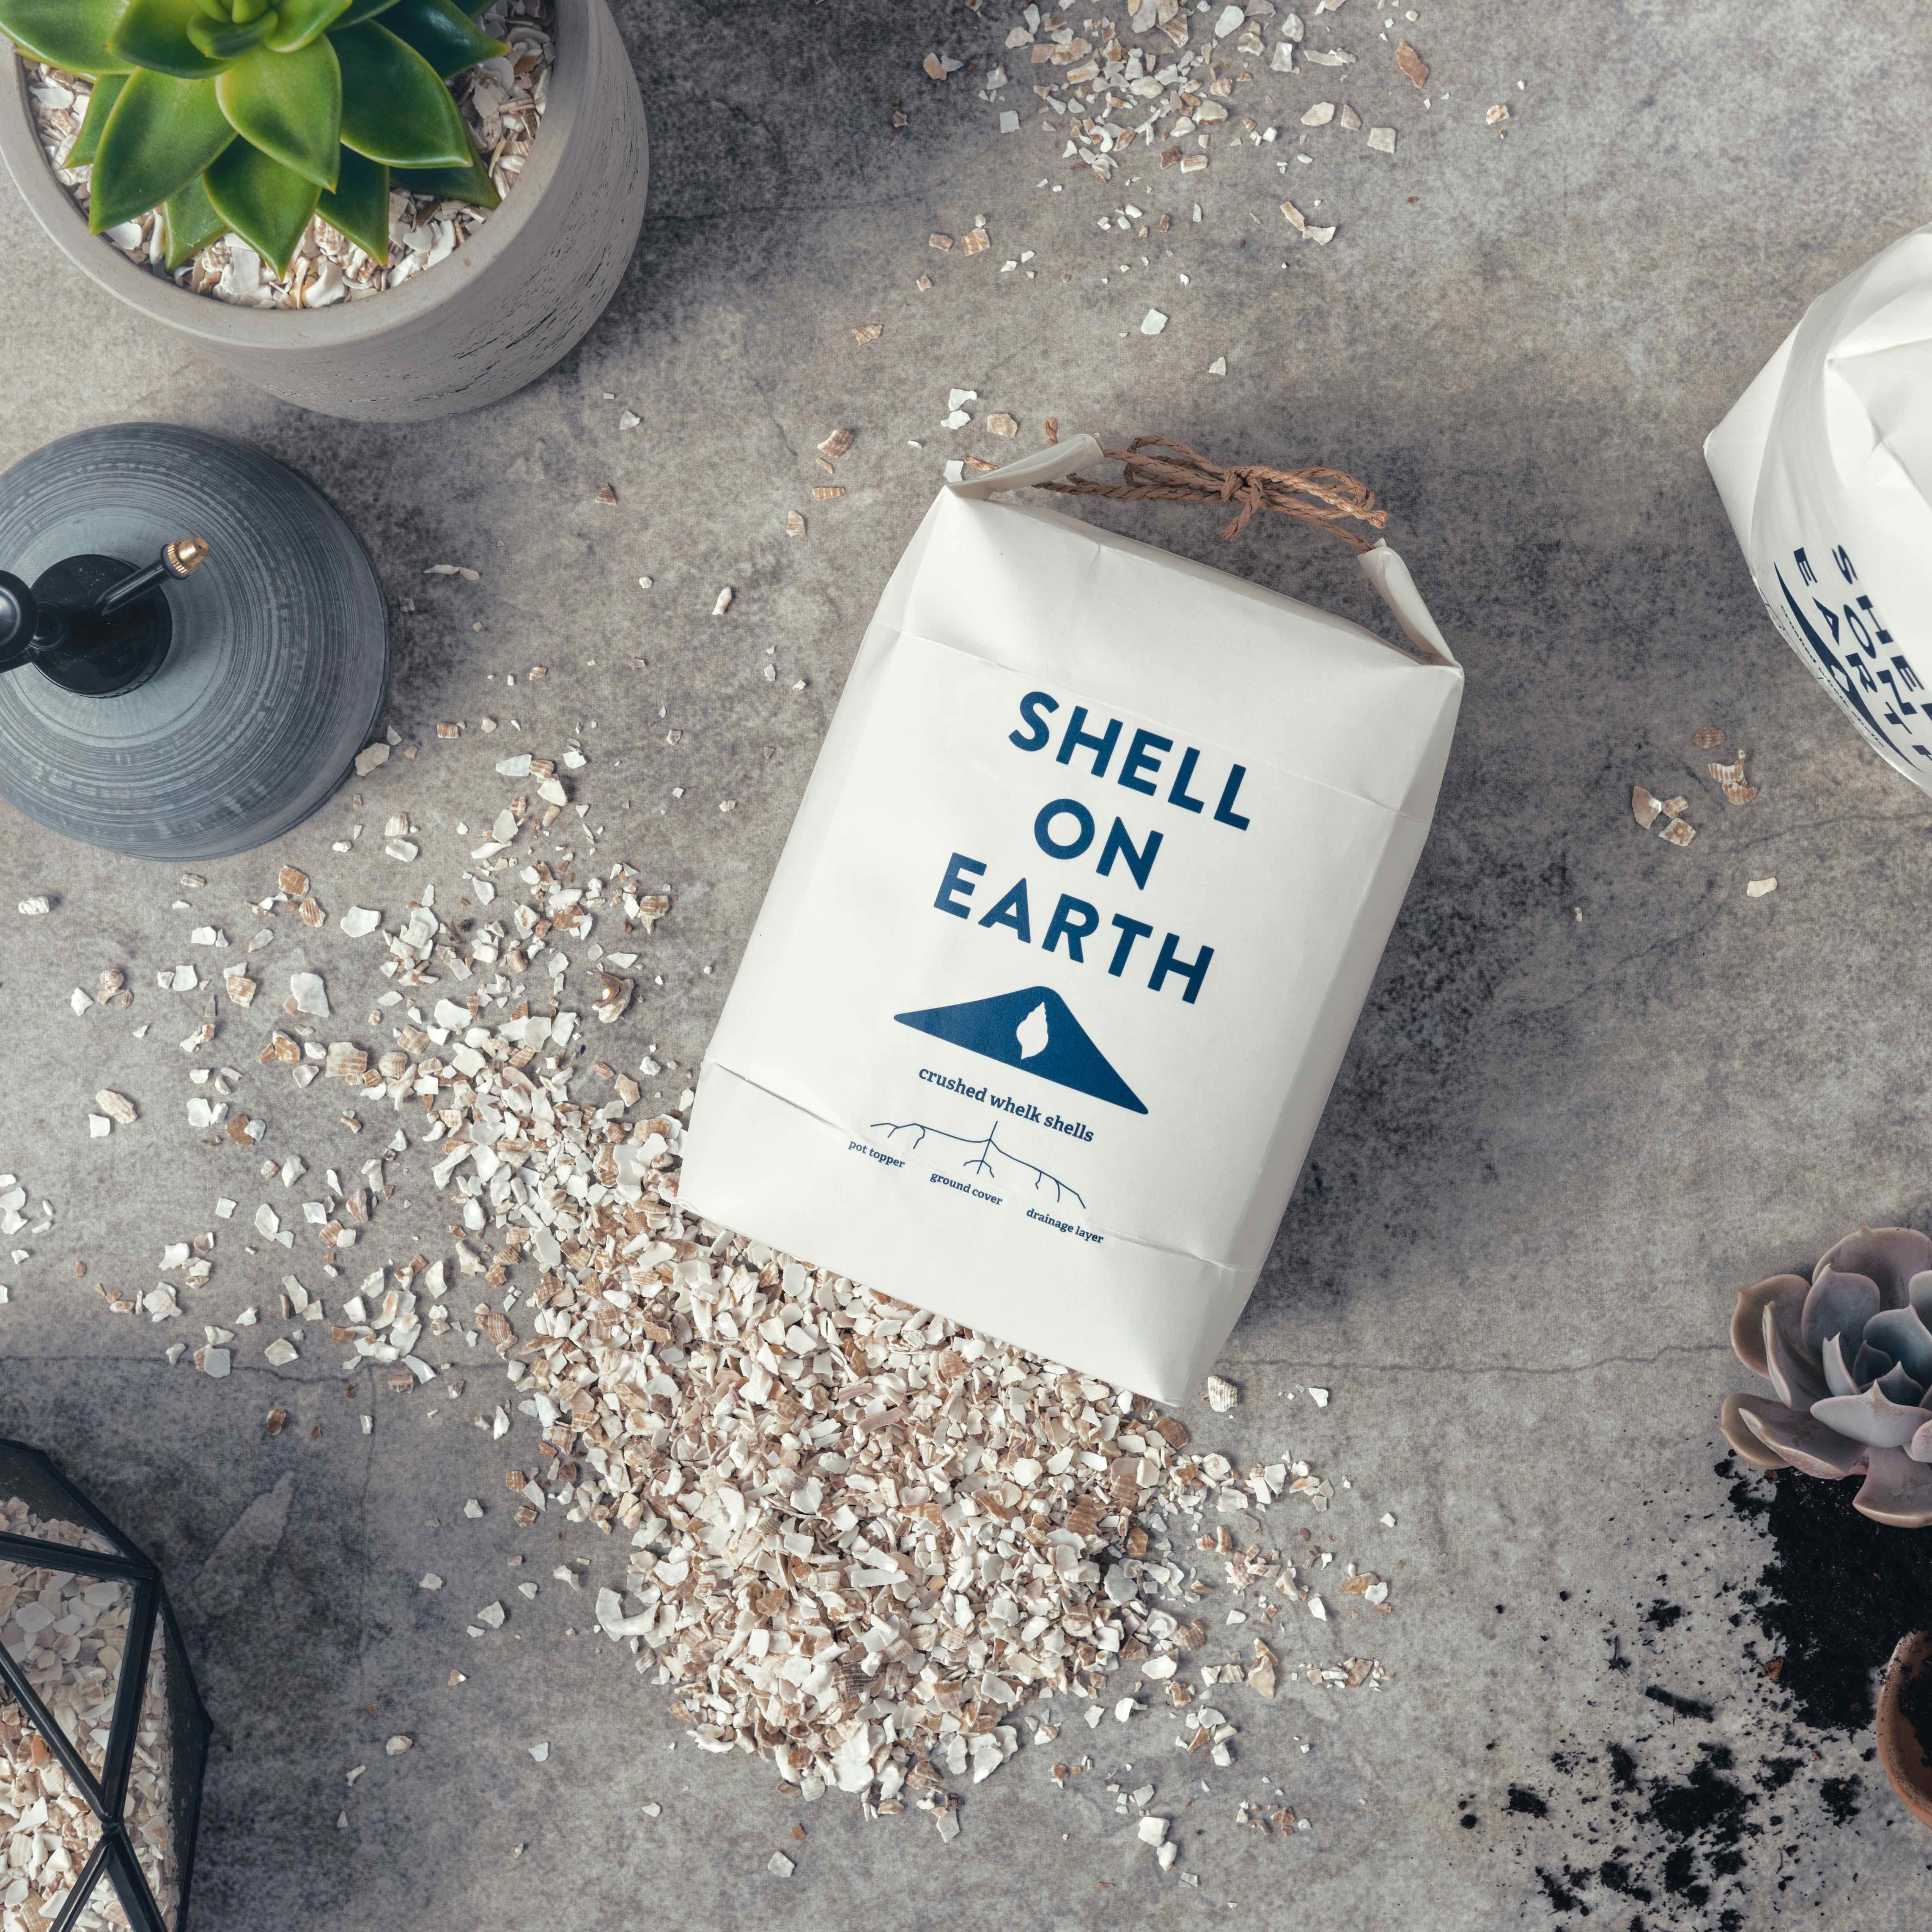 Shell On Earth crushed whelk shells